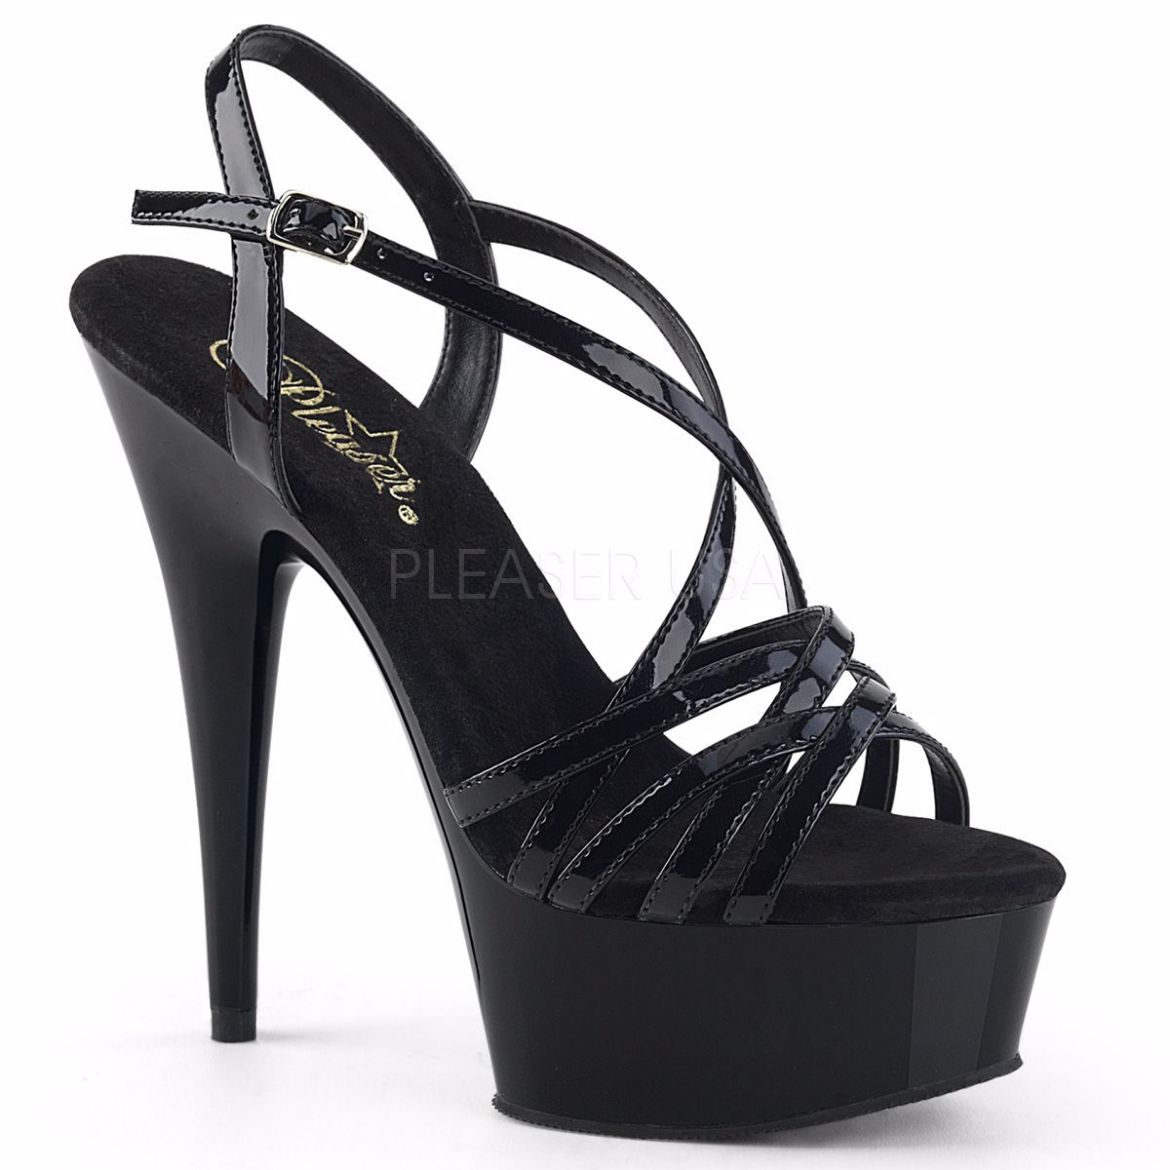 Product image of Pleaser Delight-613 Black Patent/Black, 6 inch (15.2 cm) Heel, 1 3/4 inch (4.4 cm) Platform Sandal Shoes